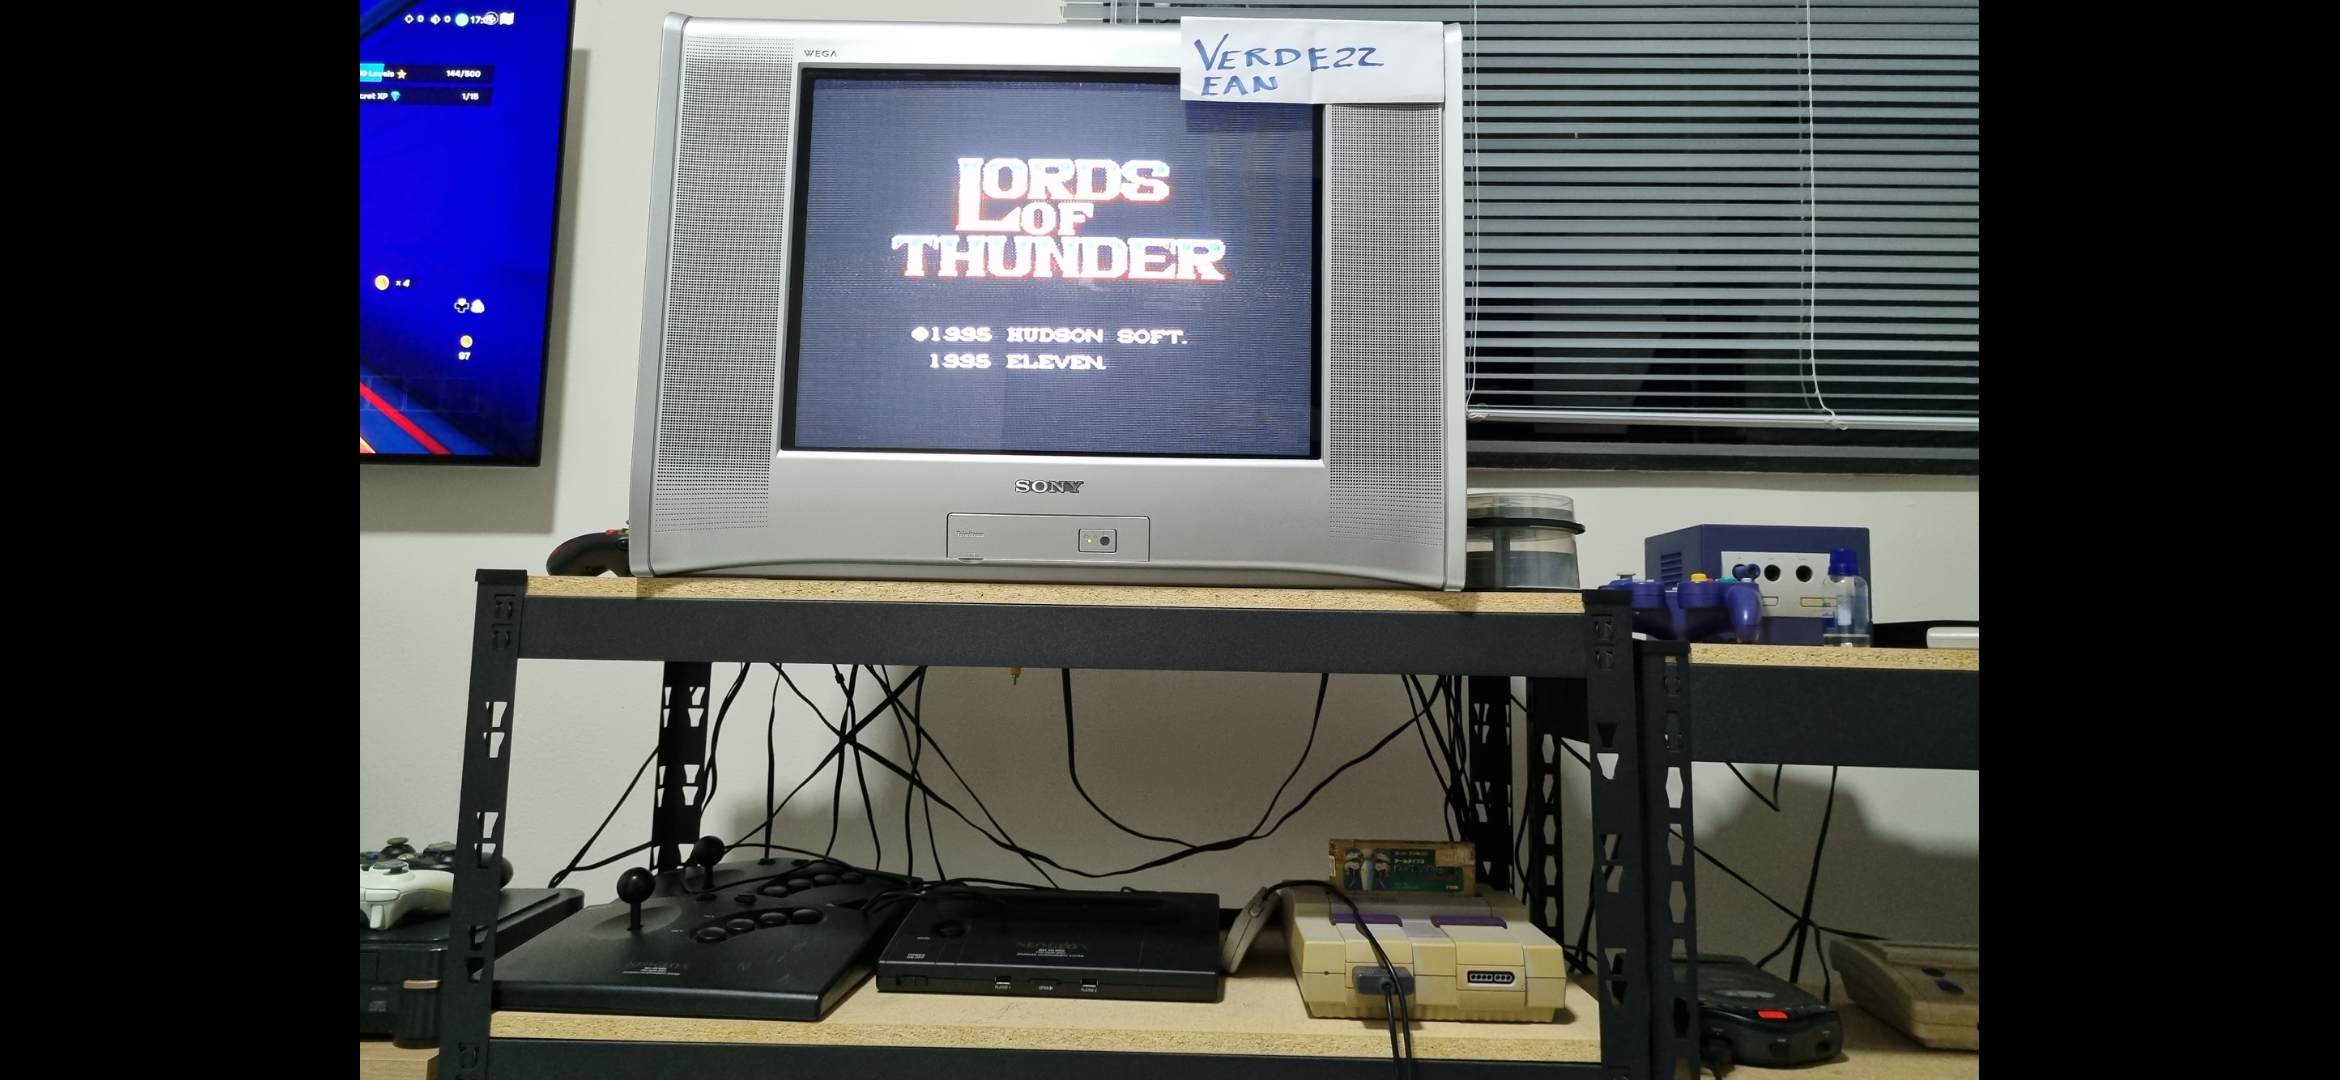 Verde22: Lords of Thunder (Sega Genesis / MegaDrive) 1,579,360 points on 2022-06-25 18:14:50